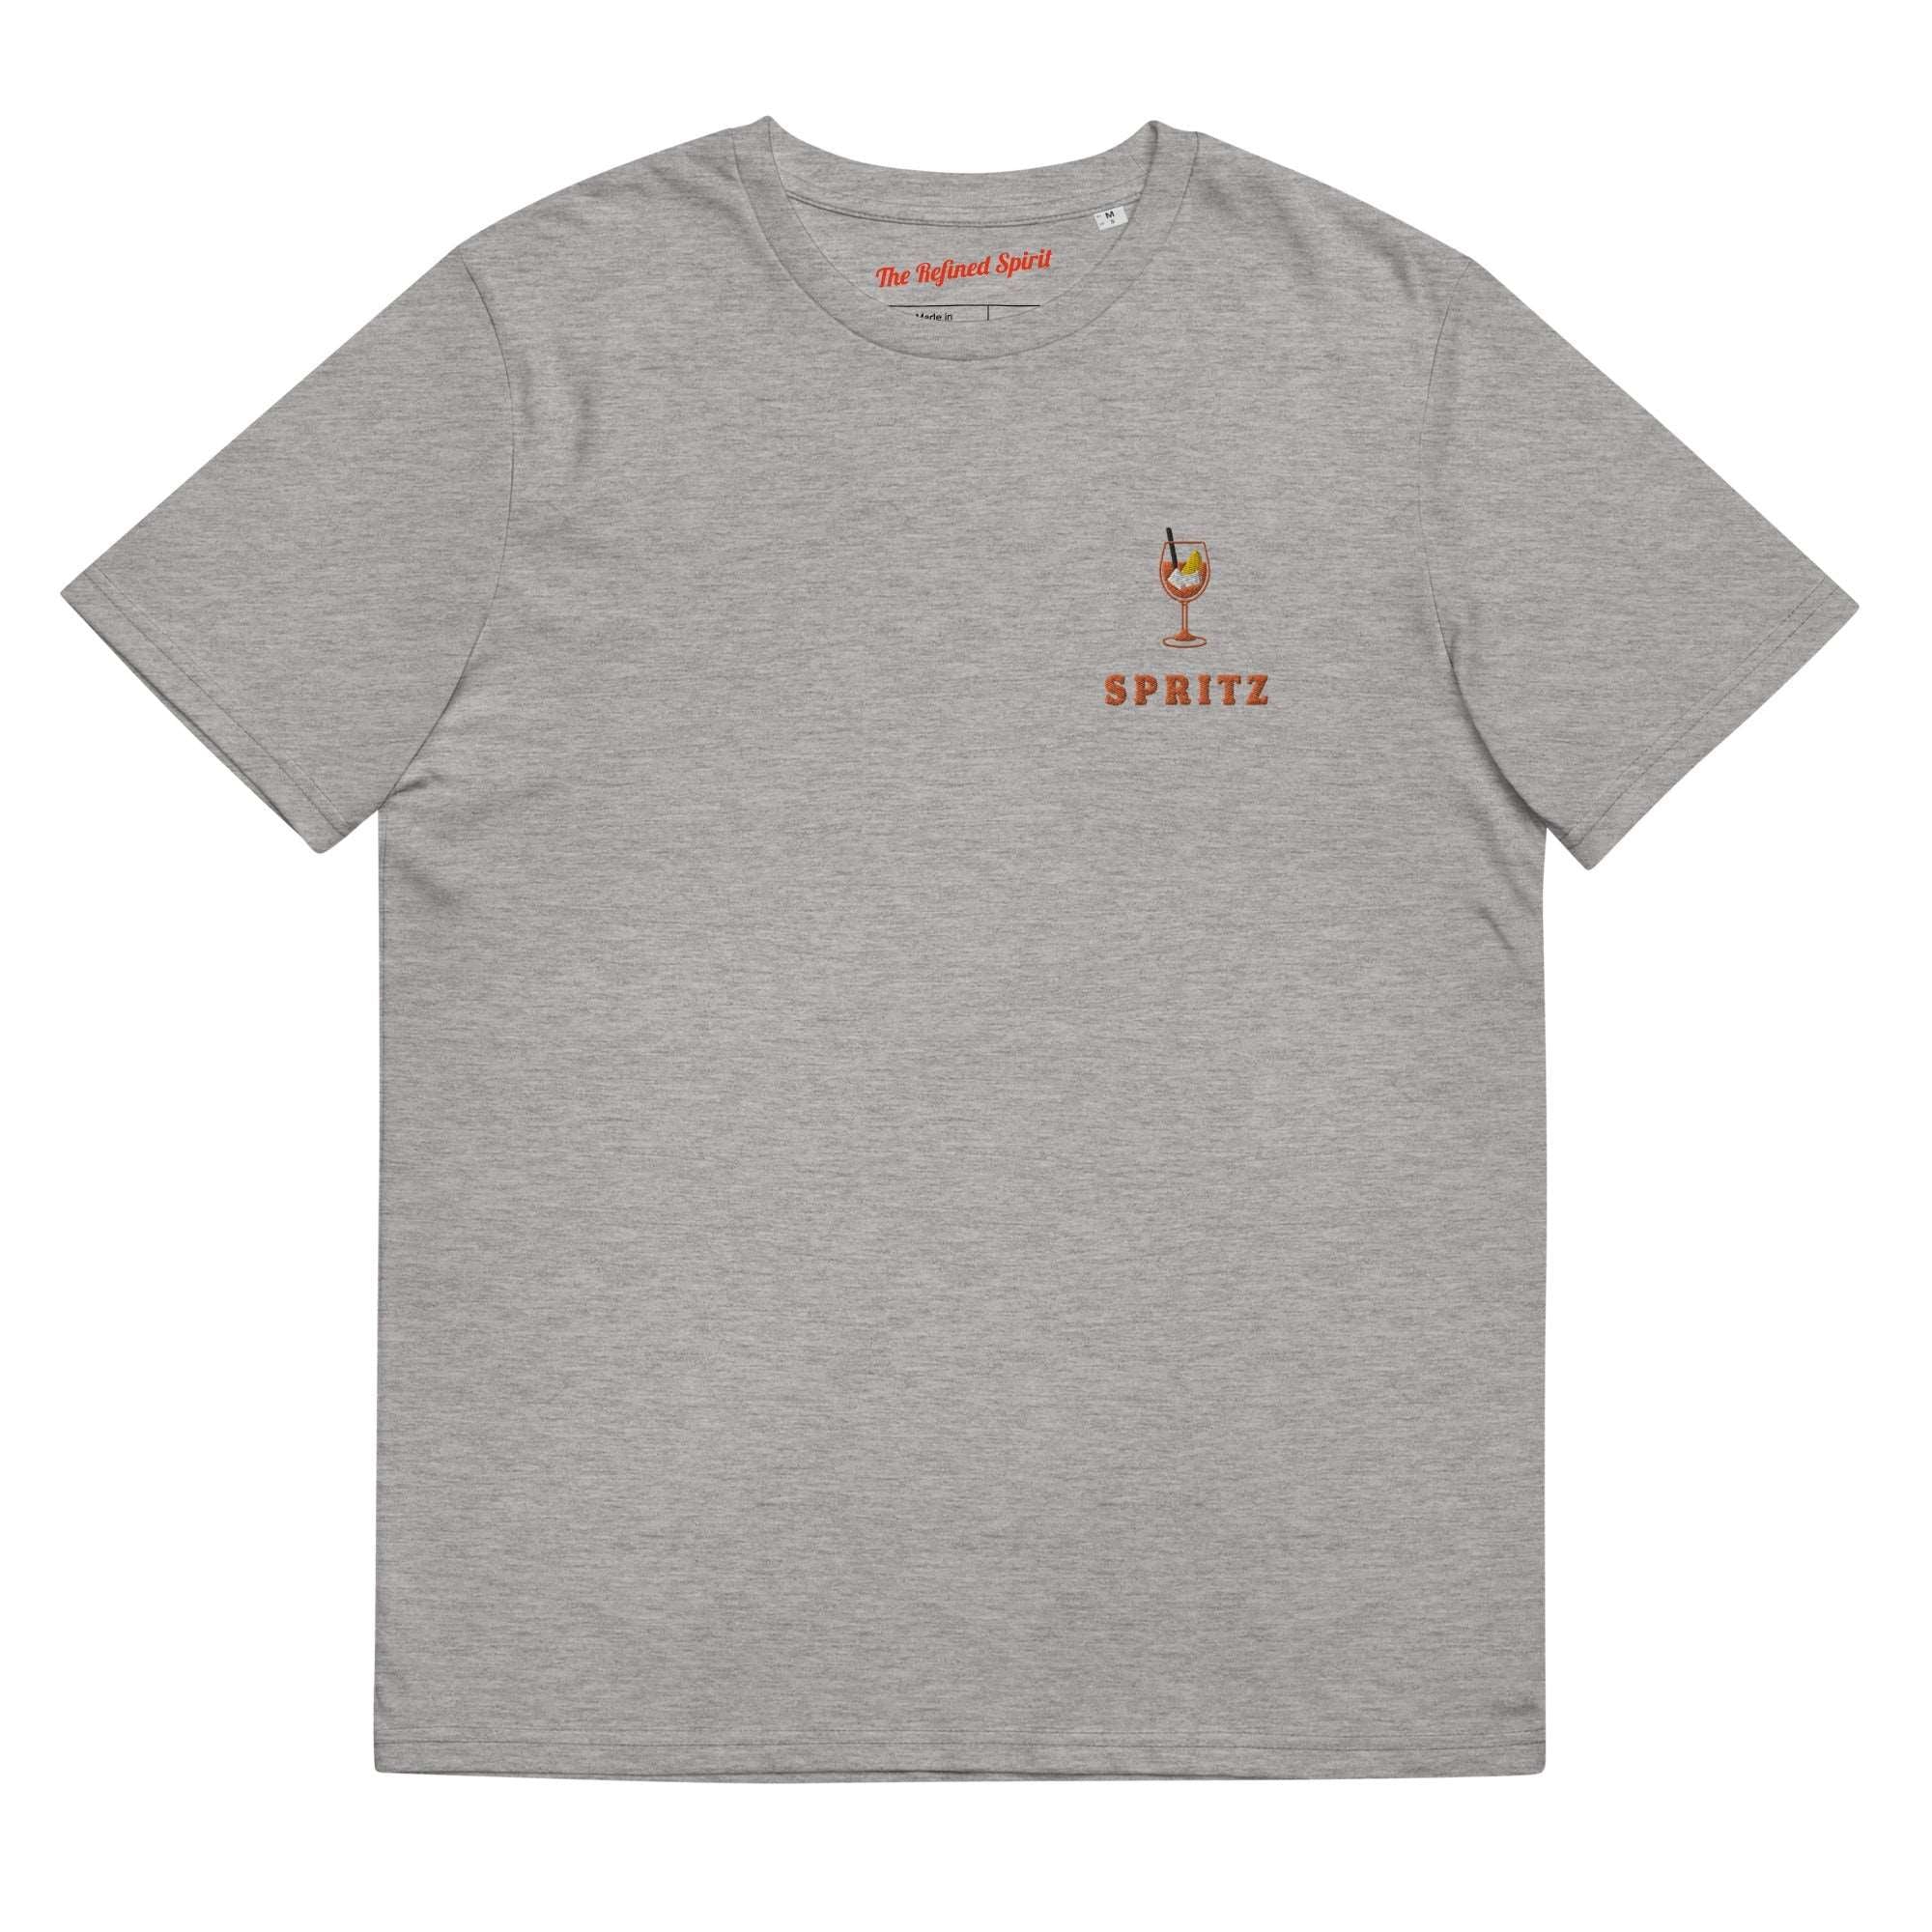 Spritz- Organic Embroidered T-shirt - The Refined Spirit